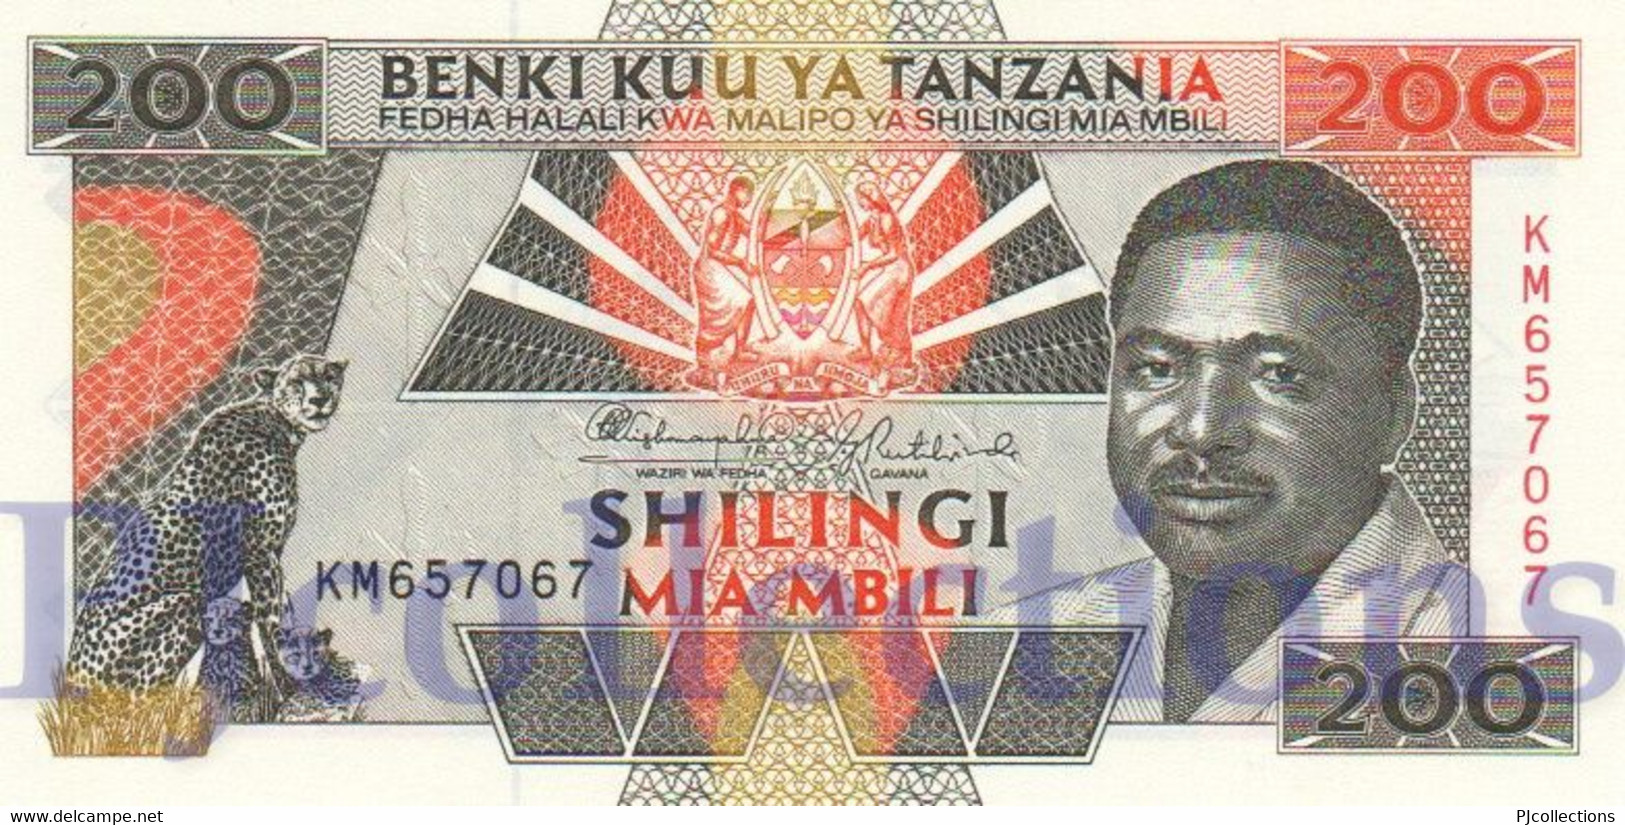 TANZANIA 200 SHILINGI 1993 PICK 25b UNC - Tanzania